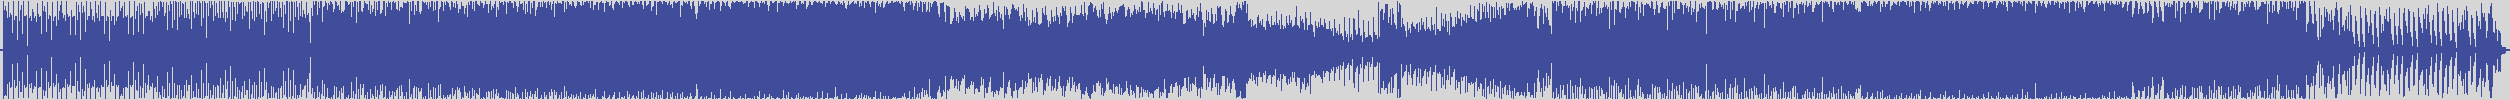 nf_boyz_records [NFY017] Rebecca Louis - Make Me Dance [Party Mix] audio wave form